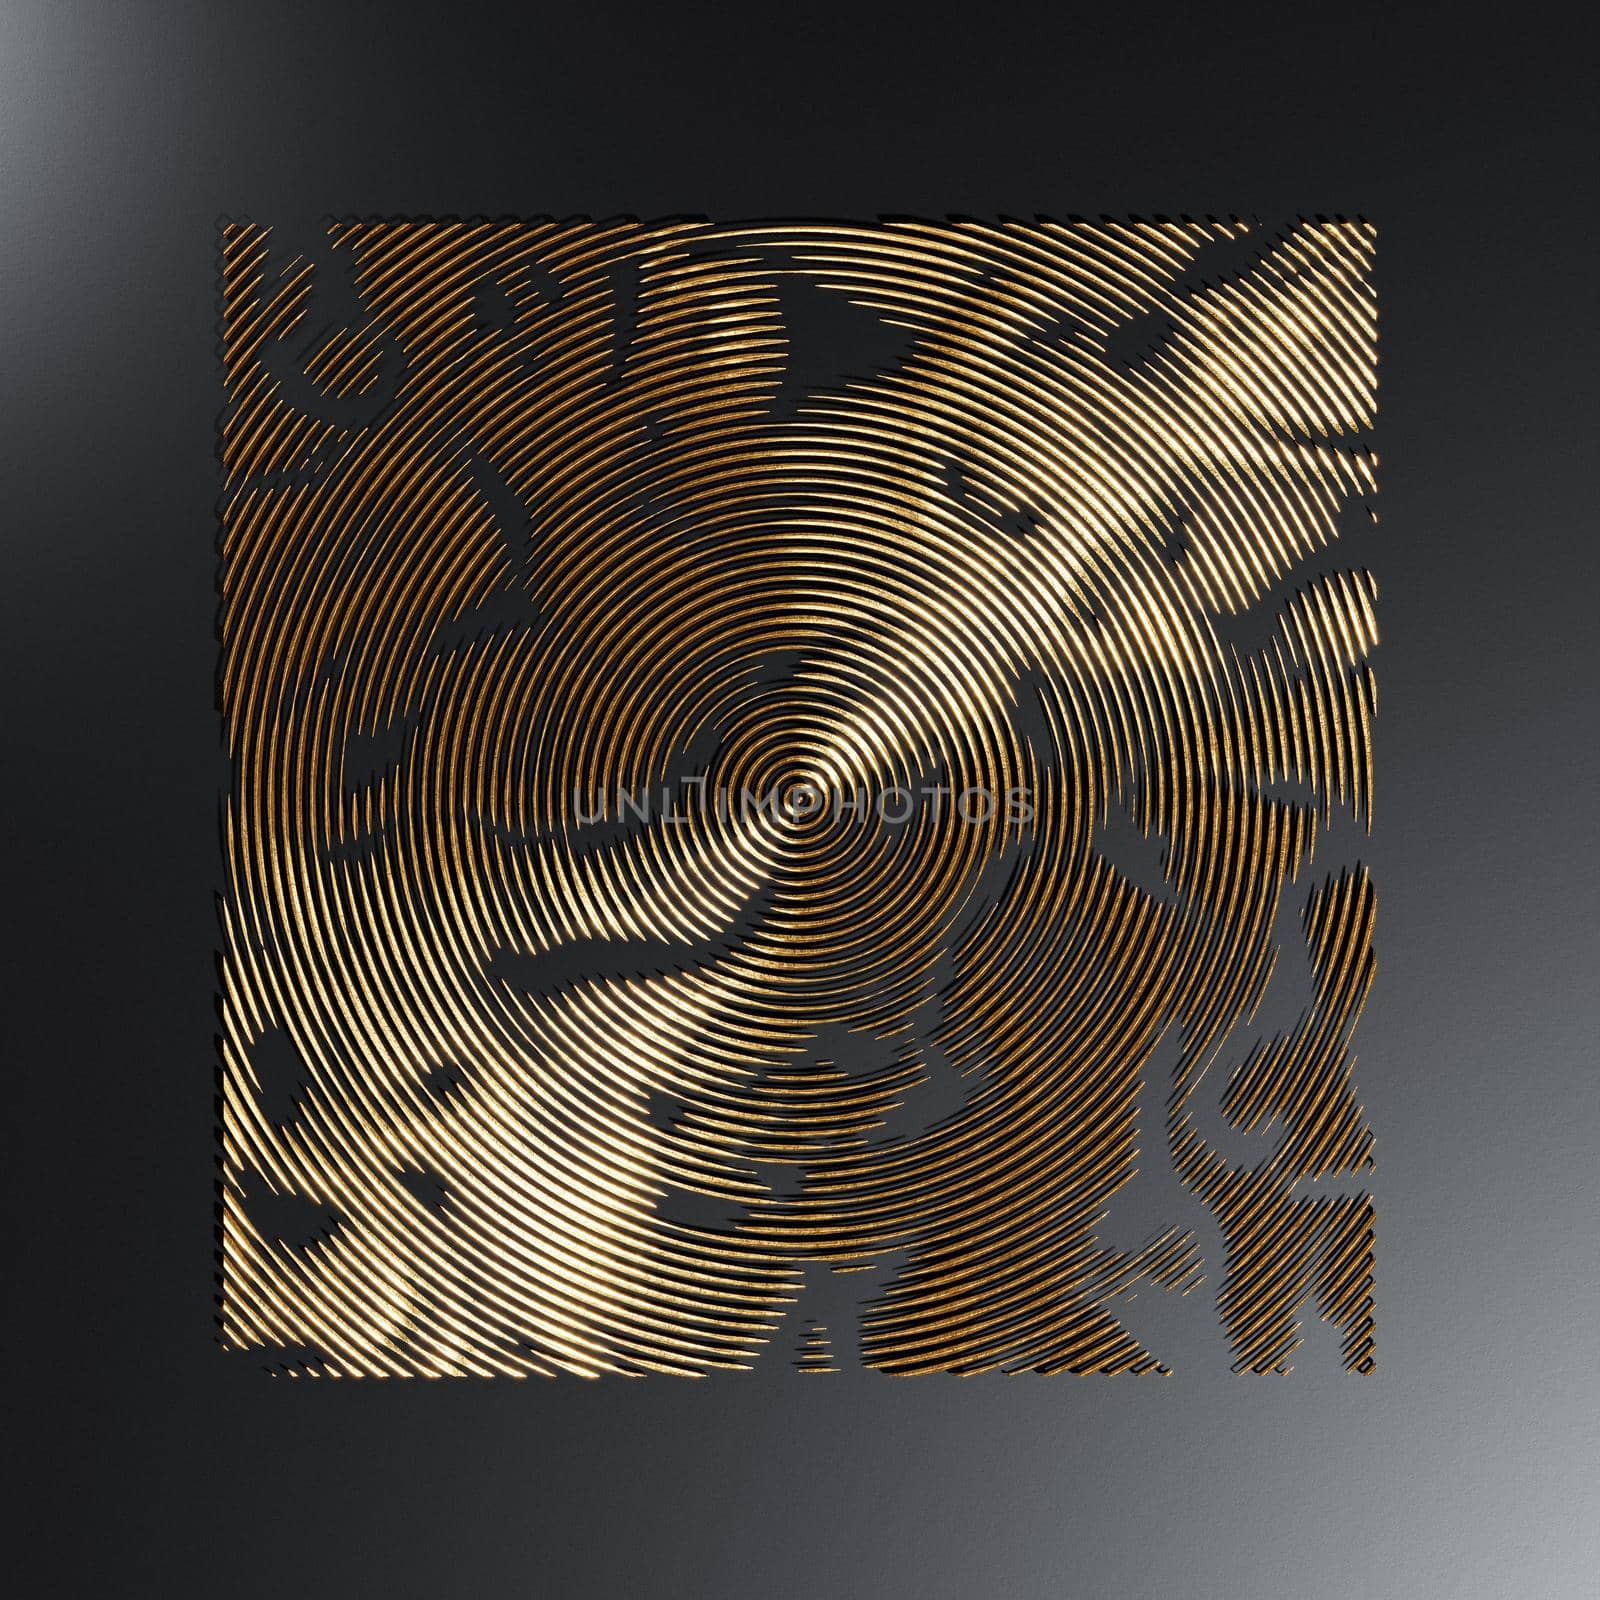 Circular golden metal texture on dark background, 3d rendering by Frostroomhead